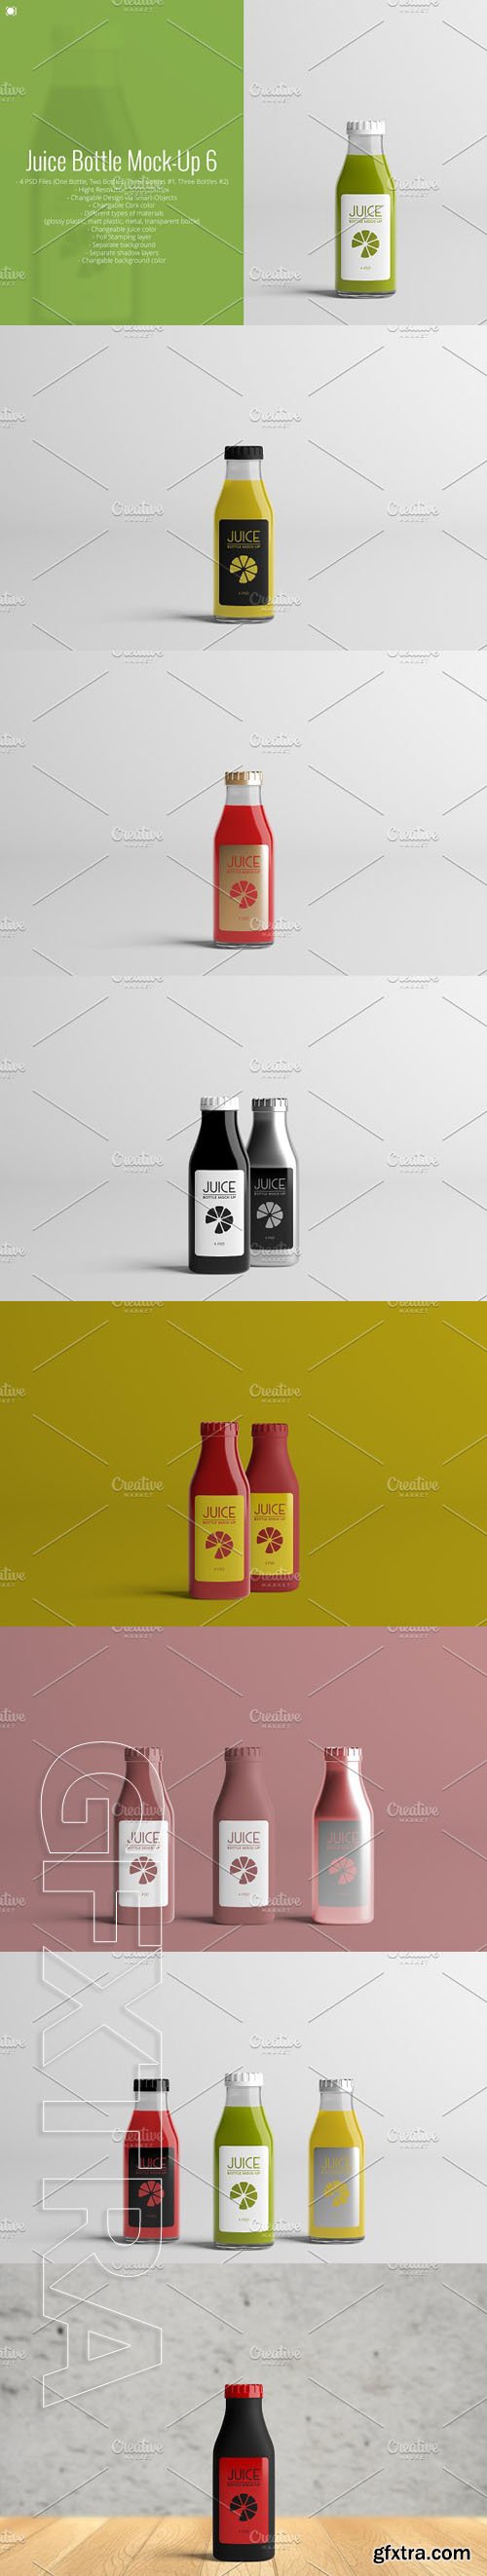 CreativeMarket - Juice Bottle Mock-Up 6 1813957